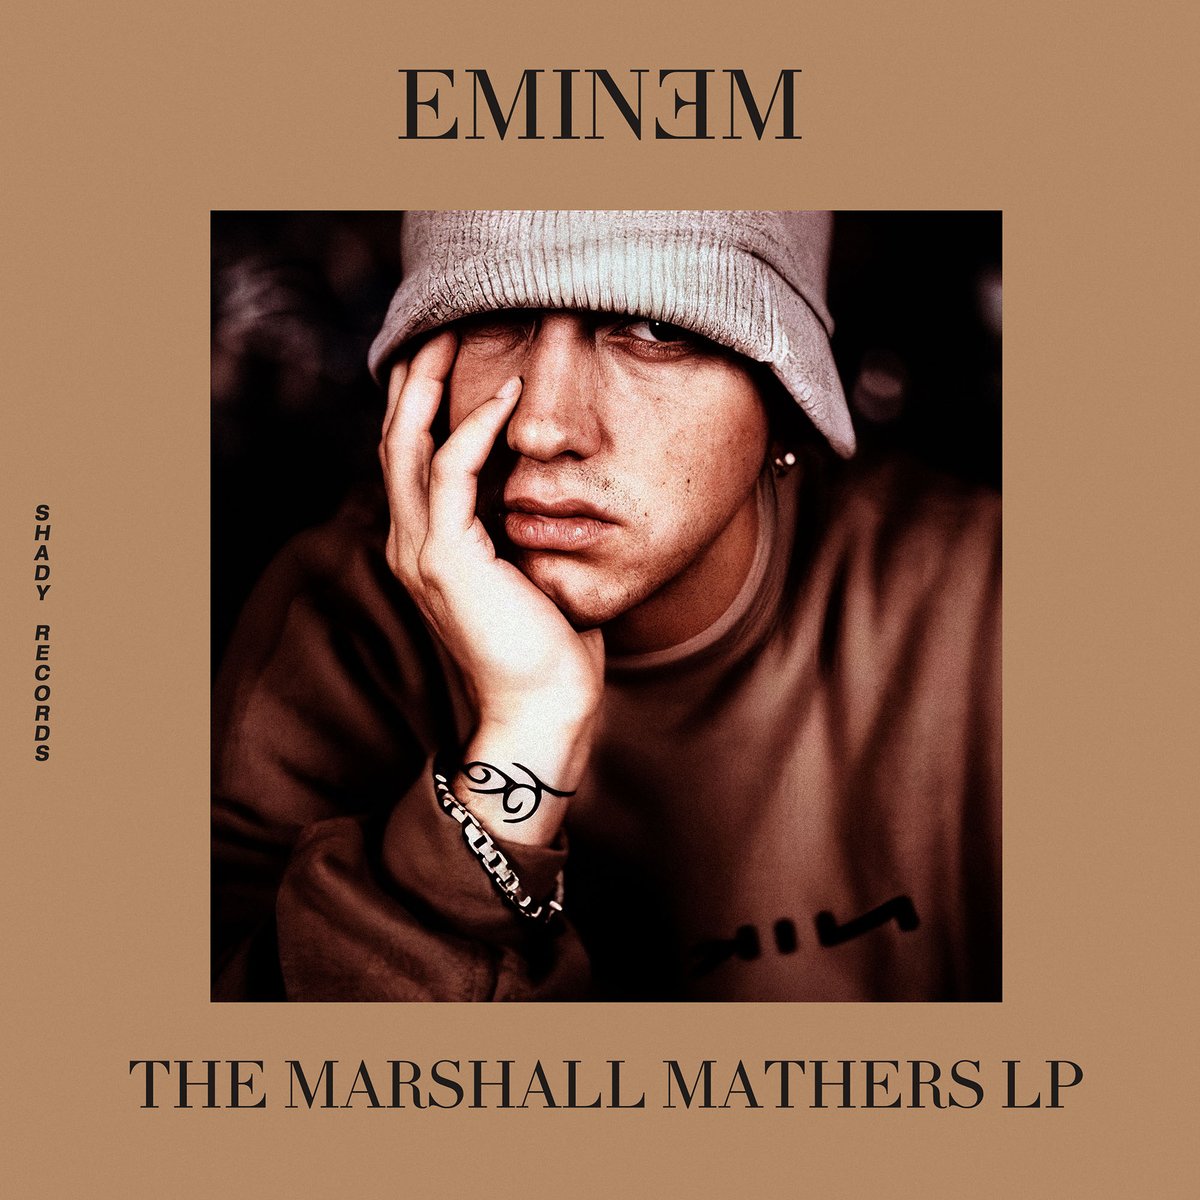 Eminem - The Marshall Mathers LP [in the style of Joji's Chloe Burbank Vol. I]

#Eminem #Joji #ChloeBurbank #MMLP #MyArt #AlbumArt #Art